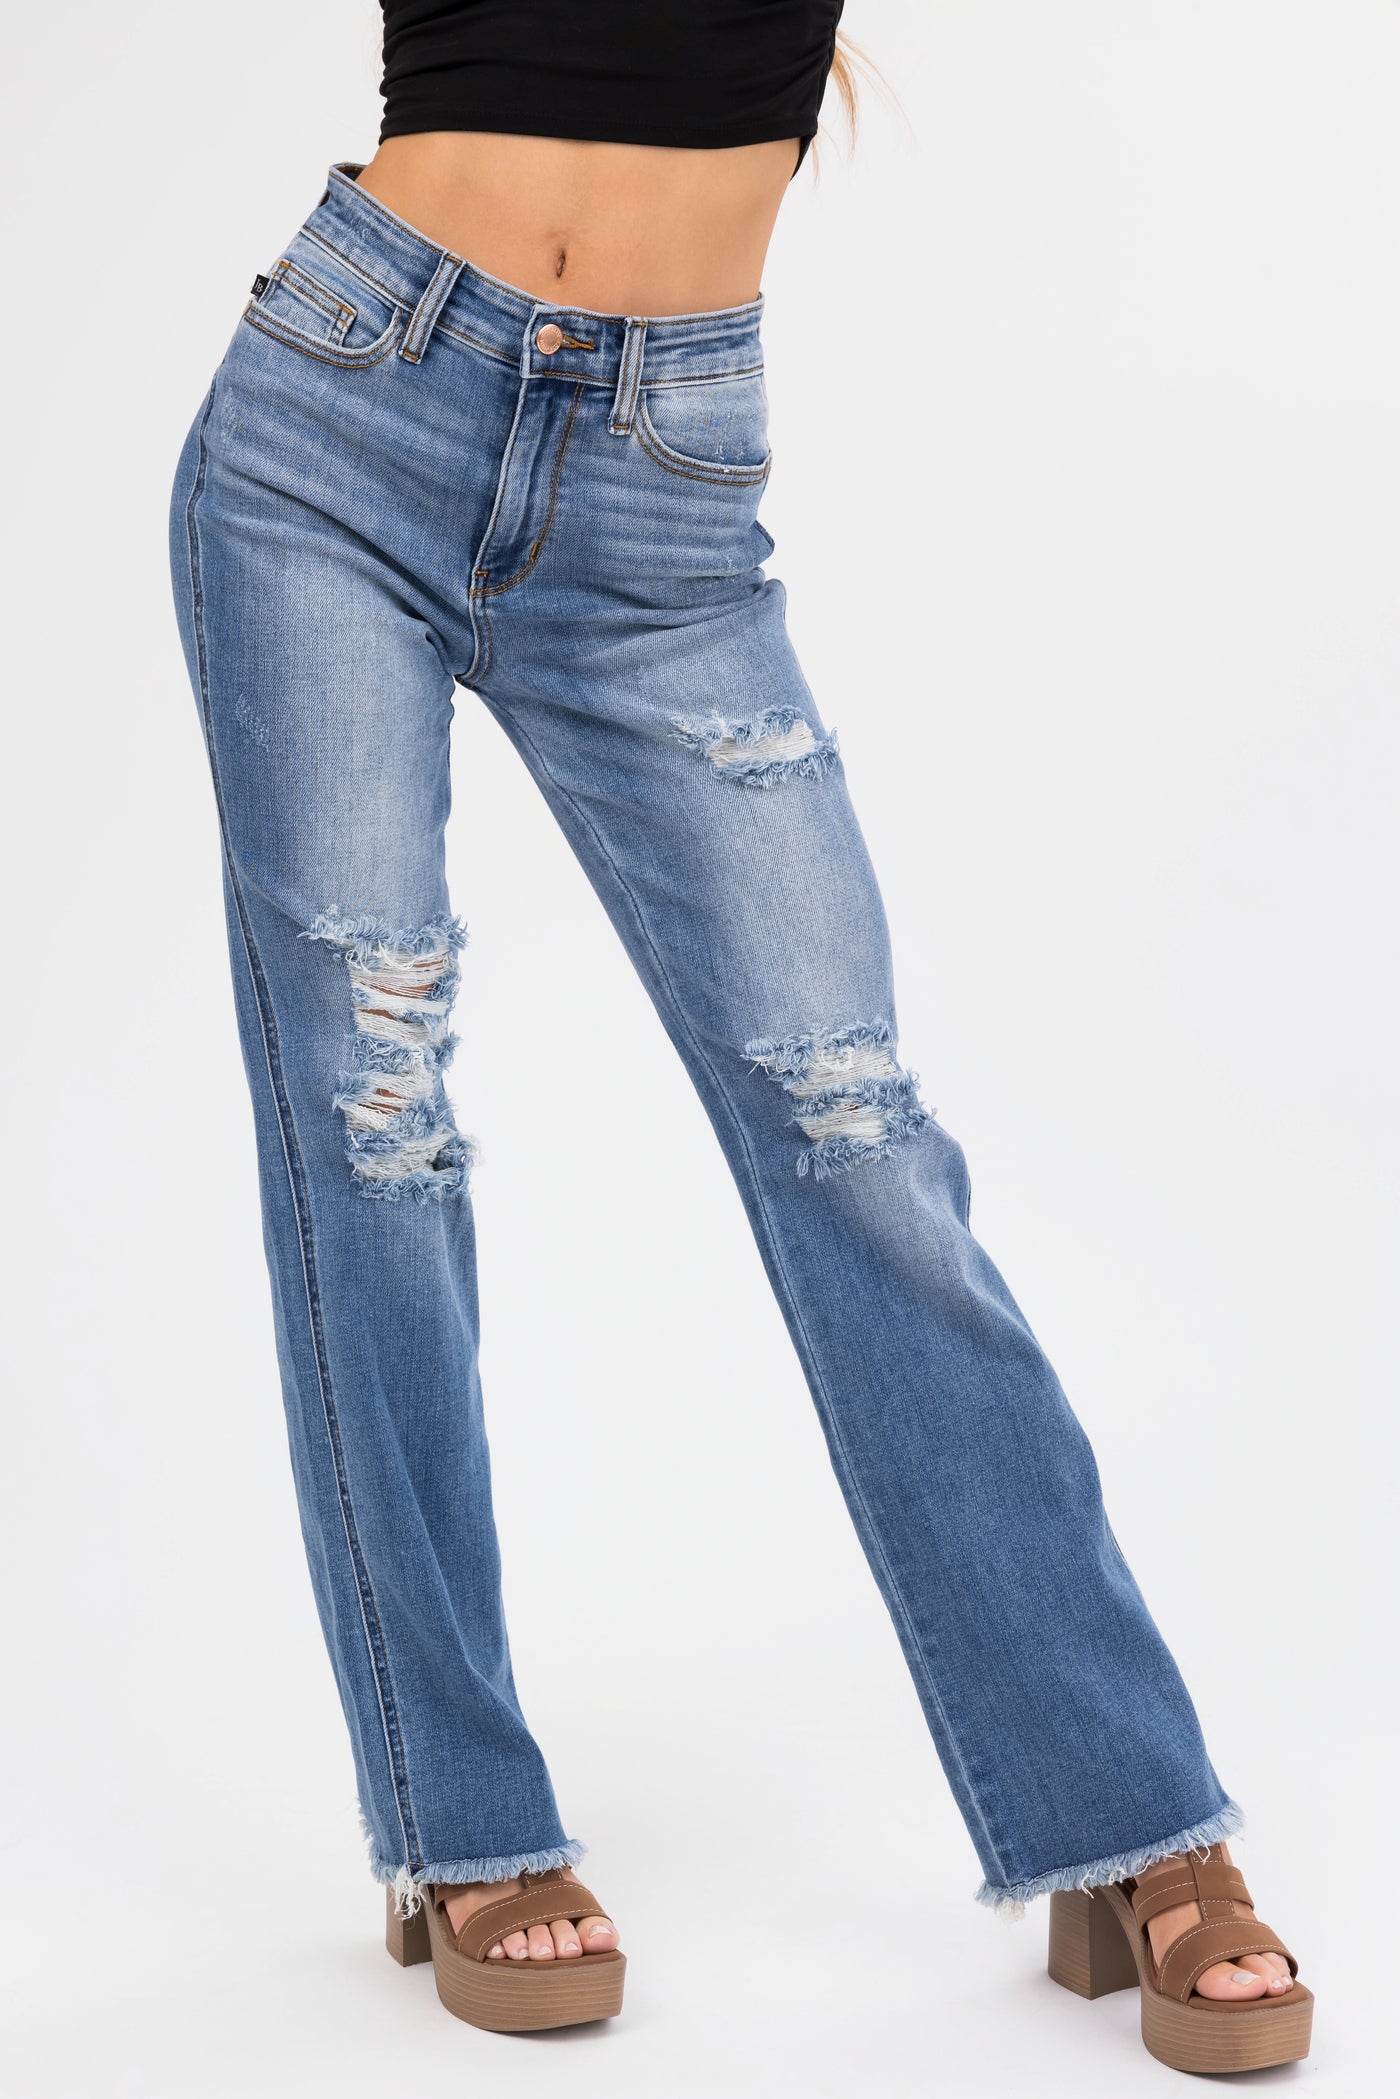 Judy Blue Medium Wash Distressed Flare Jeans